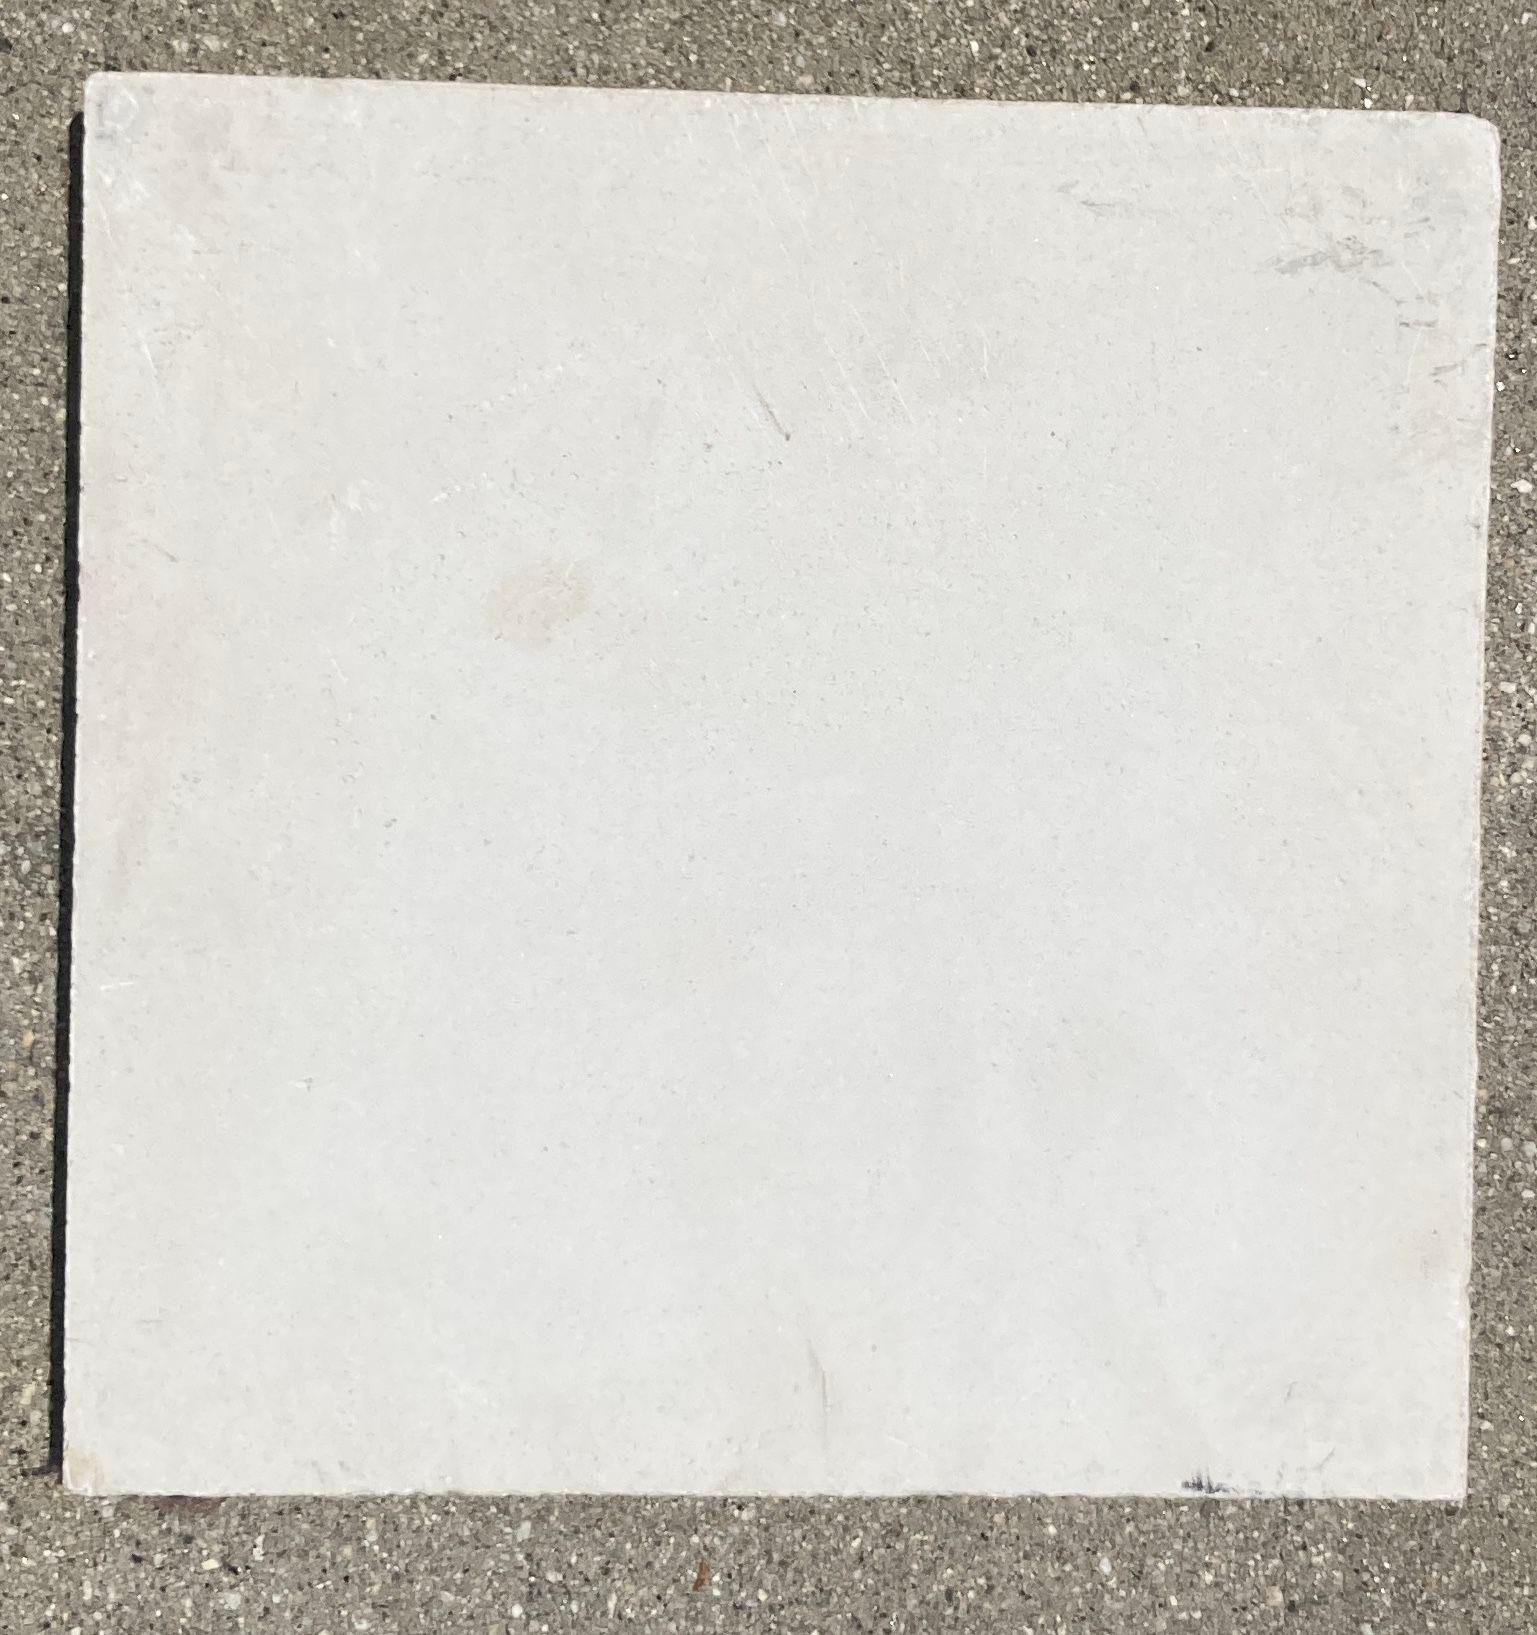 Moroccan Encaustic Cement Tile in Antique White Color For Sale 4